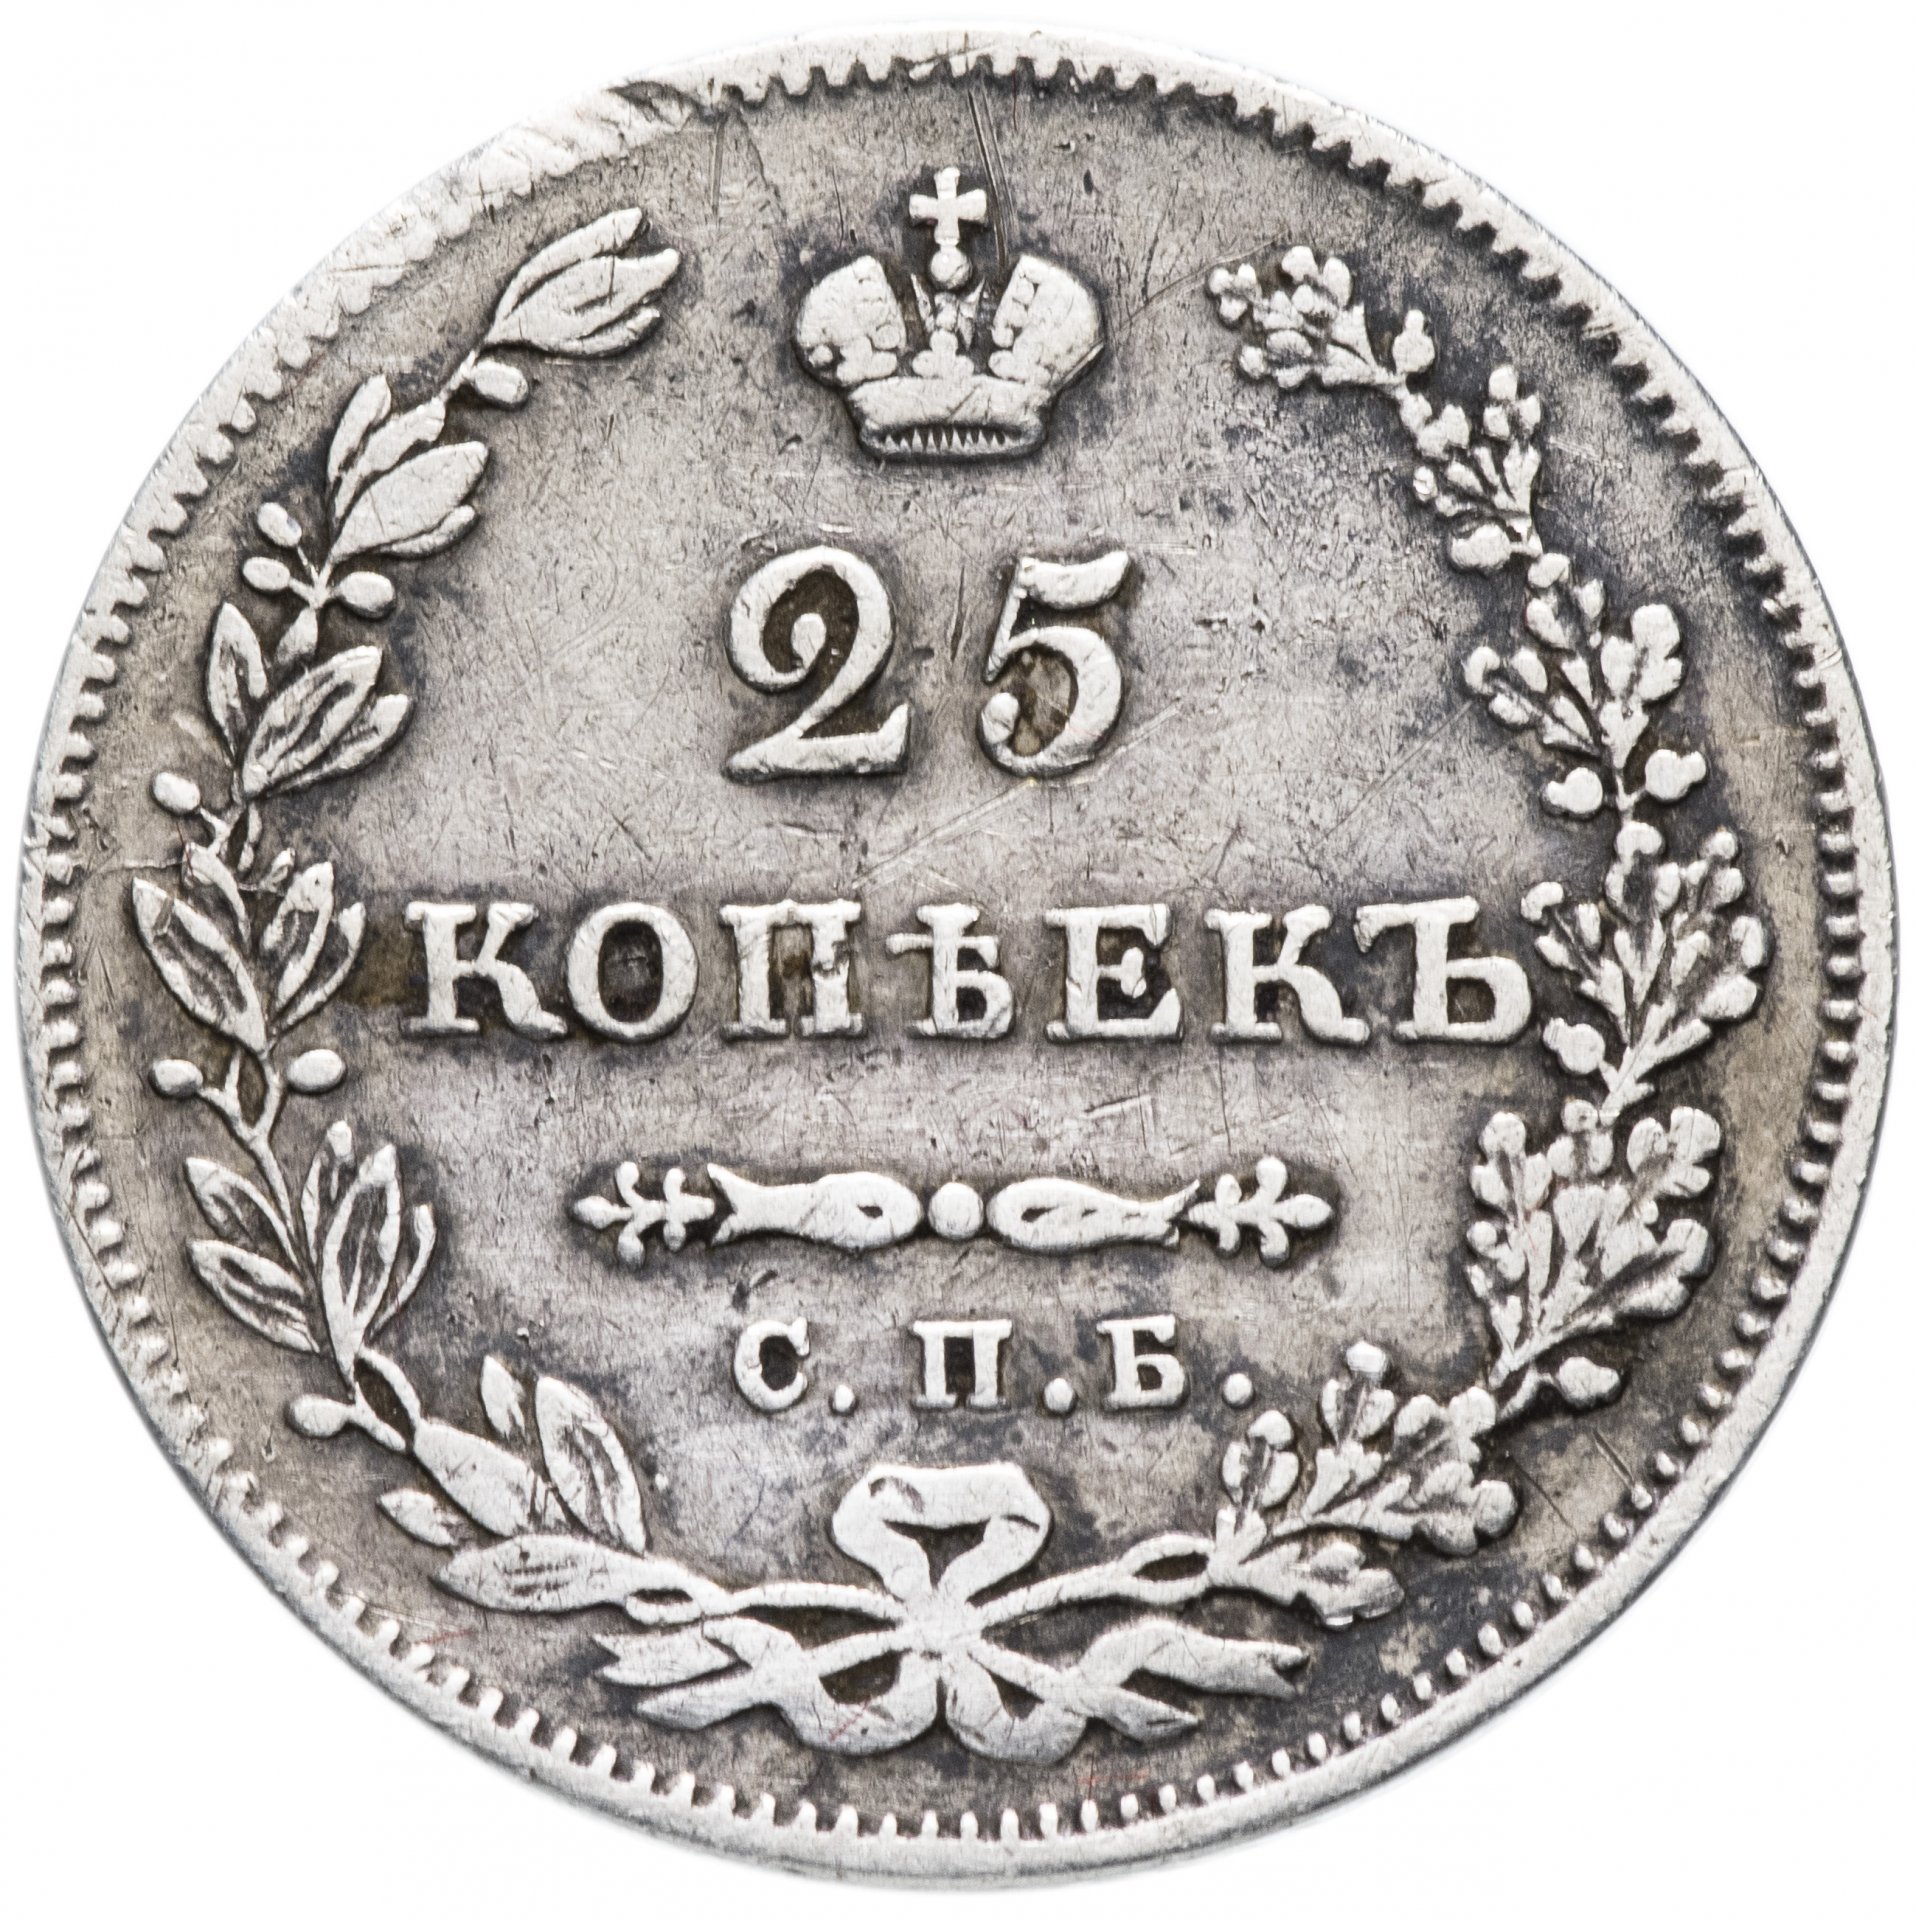 60 рублей 25 копеек. Серебряная монета 1 копейка 1829 года. Монета 25 копеек. Советские 25 копеек. Скупка 25 копеек.